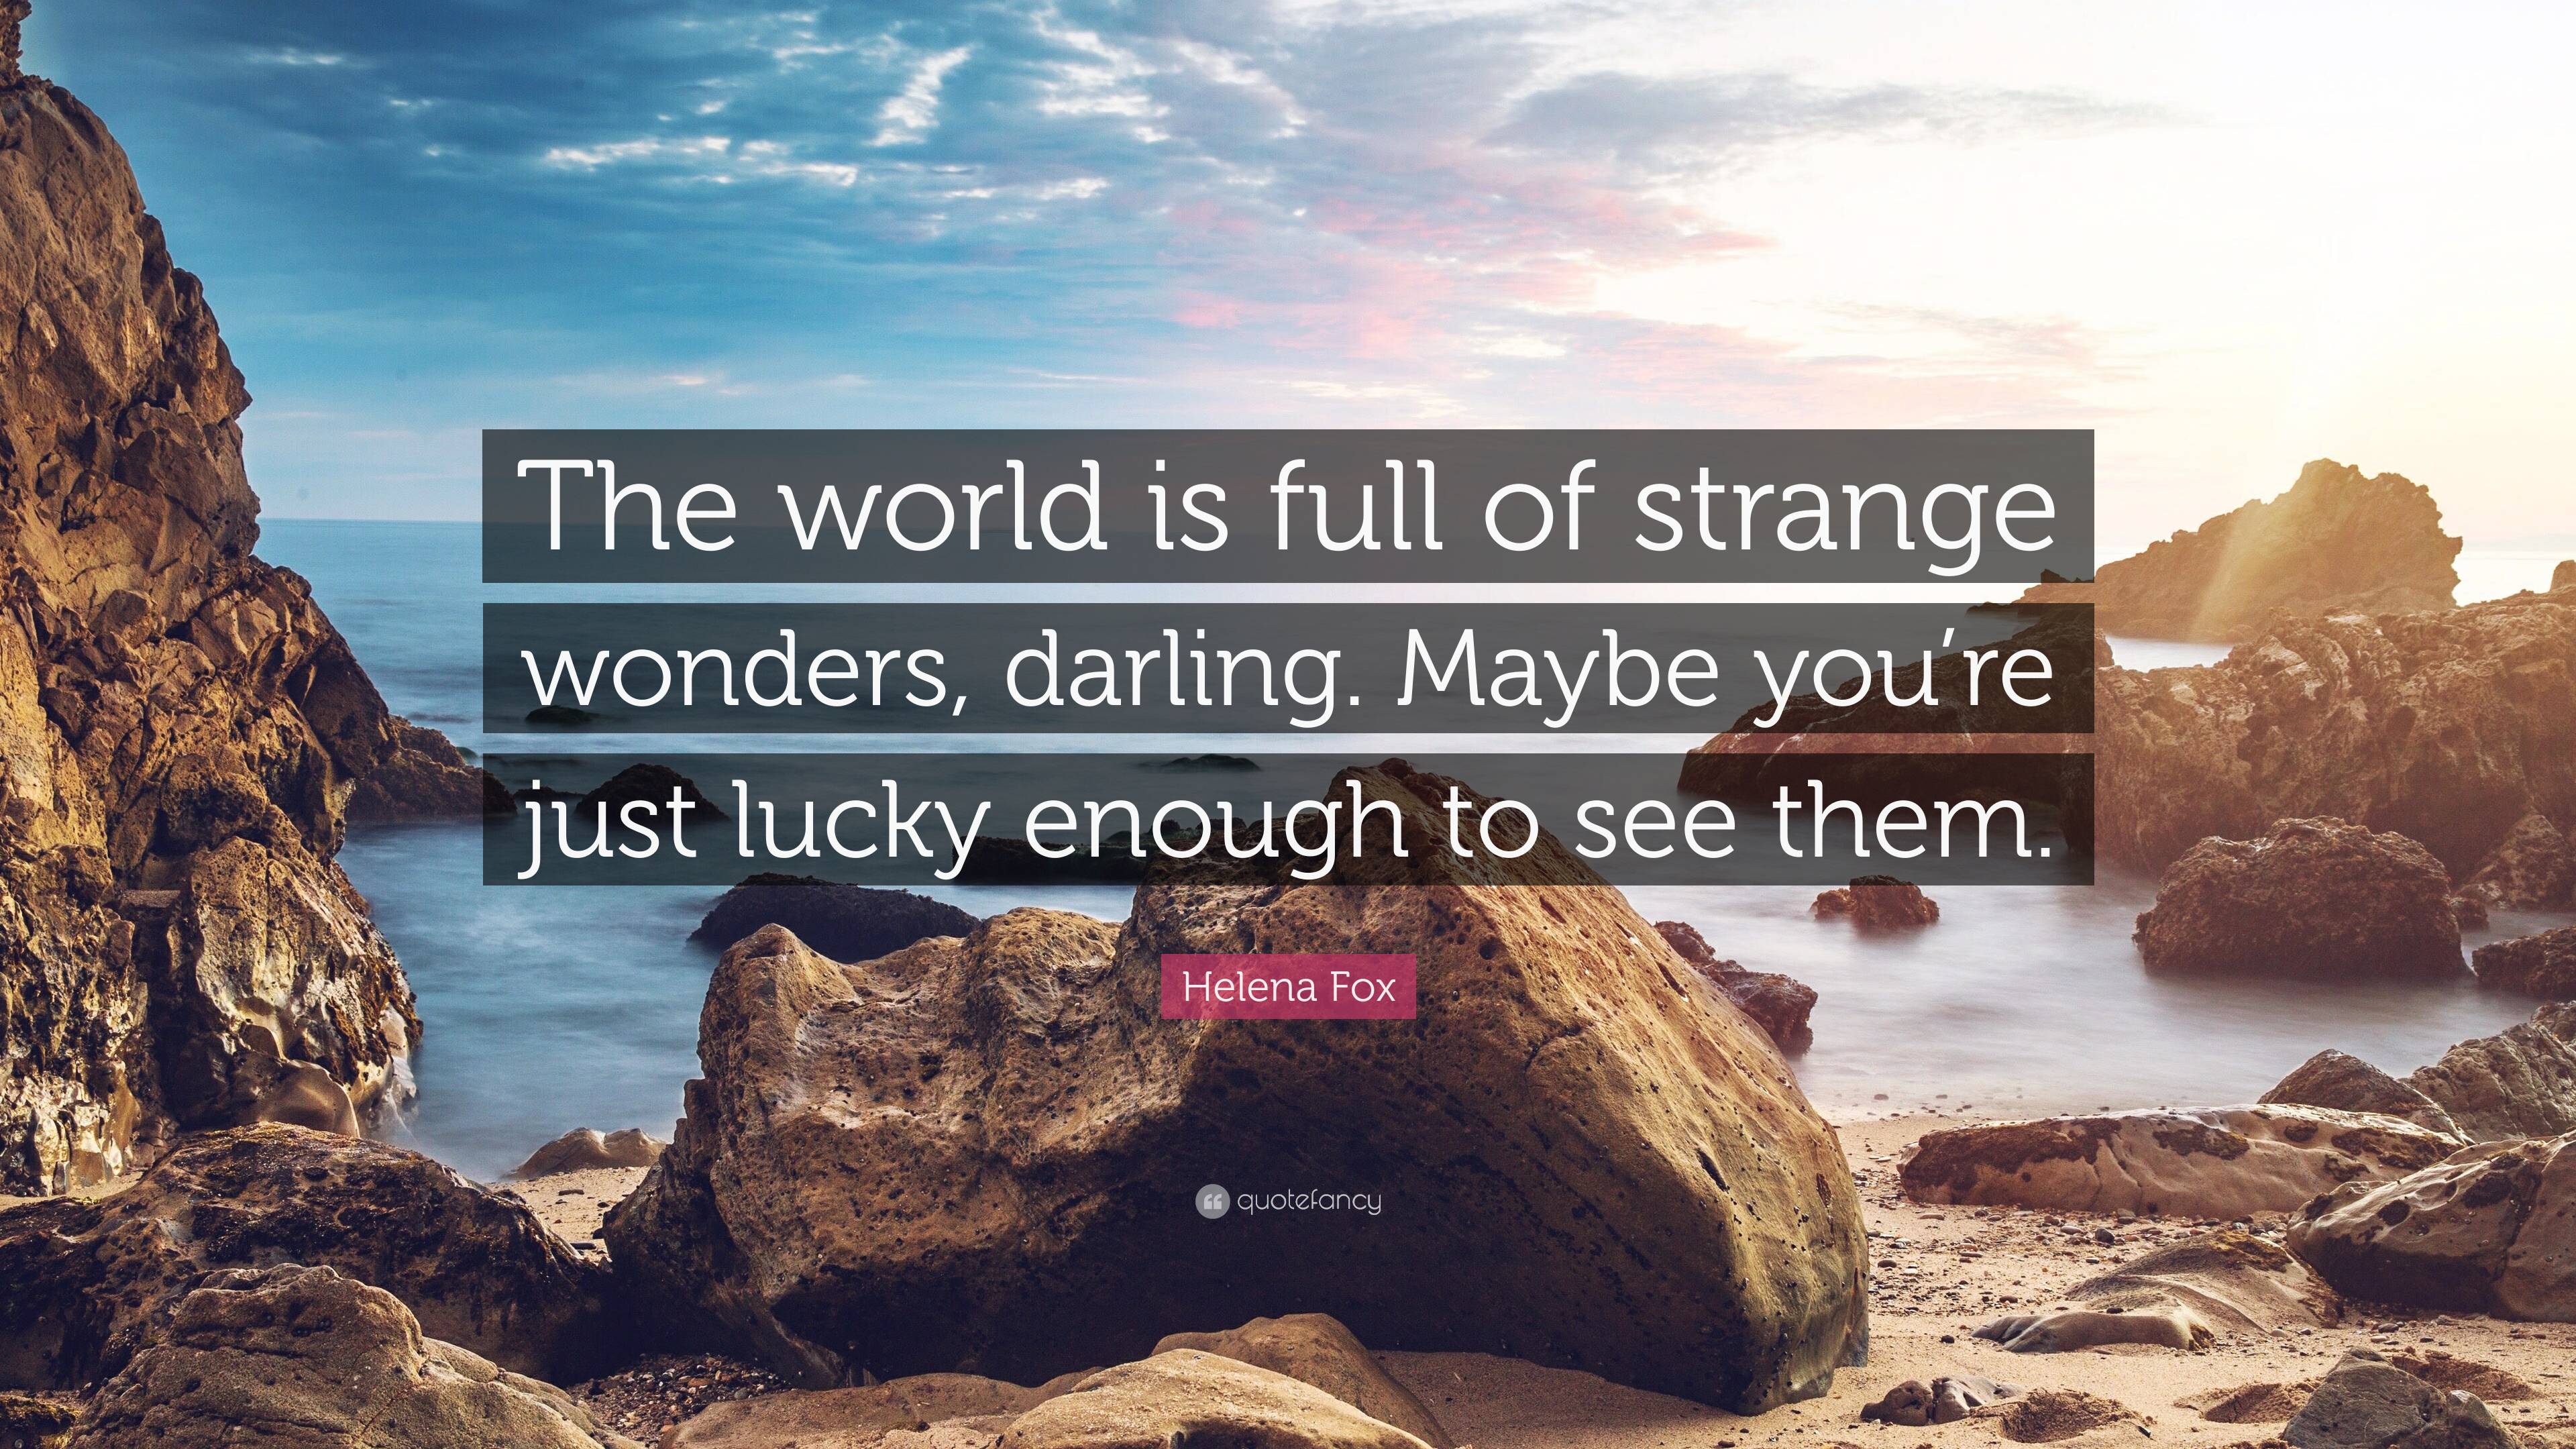 Helena Fox Quote: “The world is full of strange wonders, darling